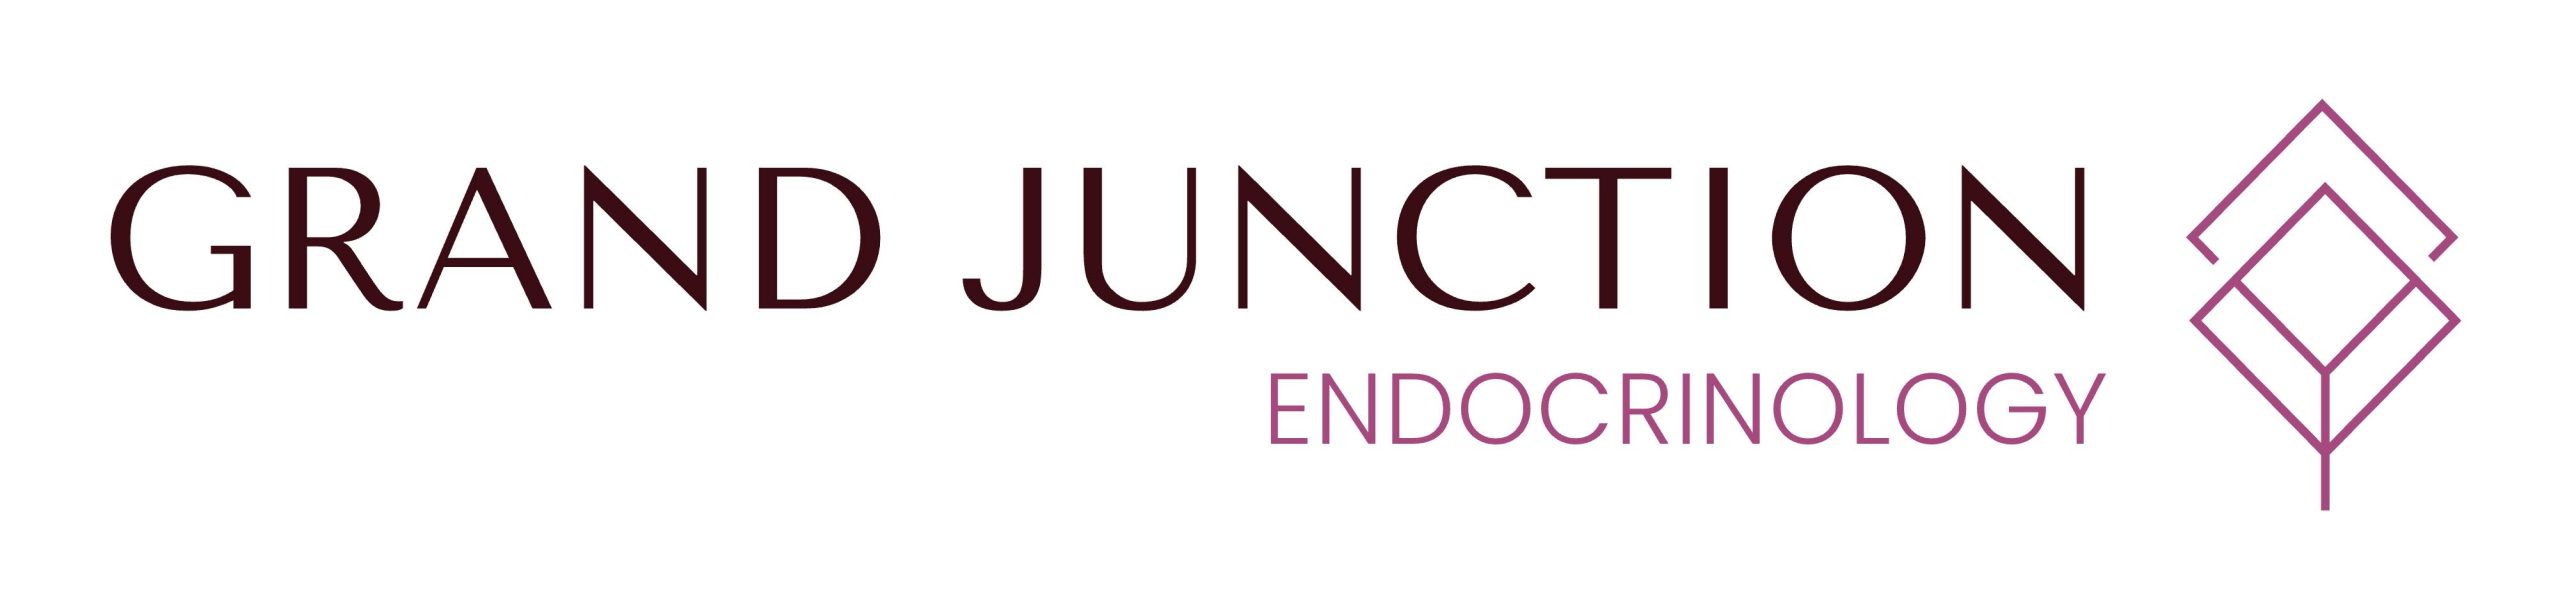 Grand Junction Endocrinology